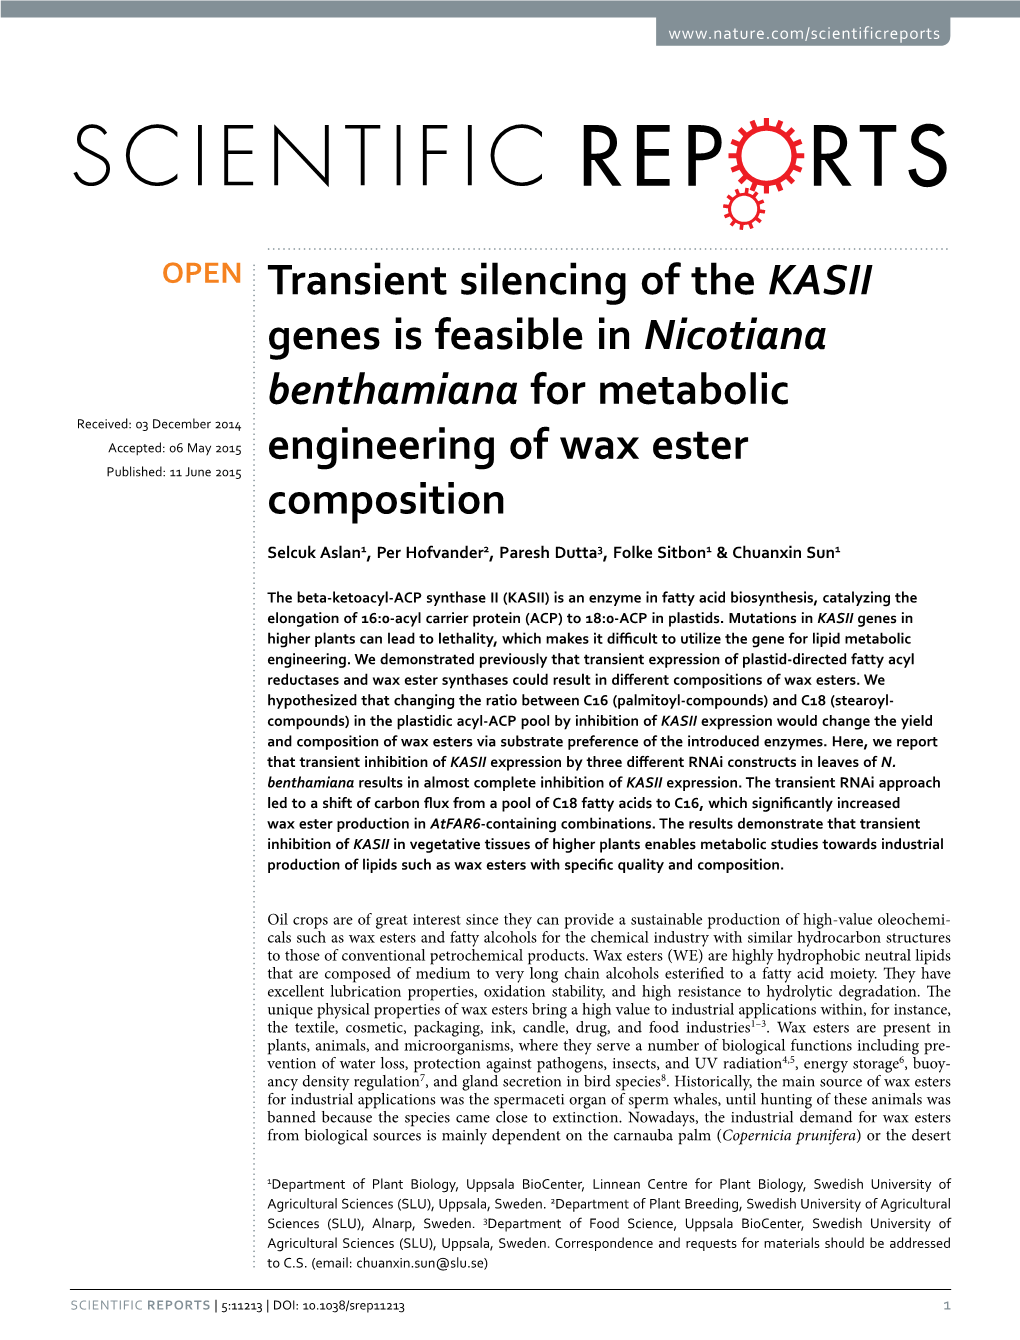 Transient Silencing of the KASII Genes Is Feasible in Nicotiana